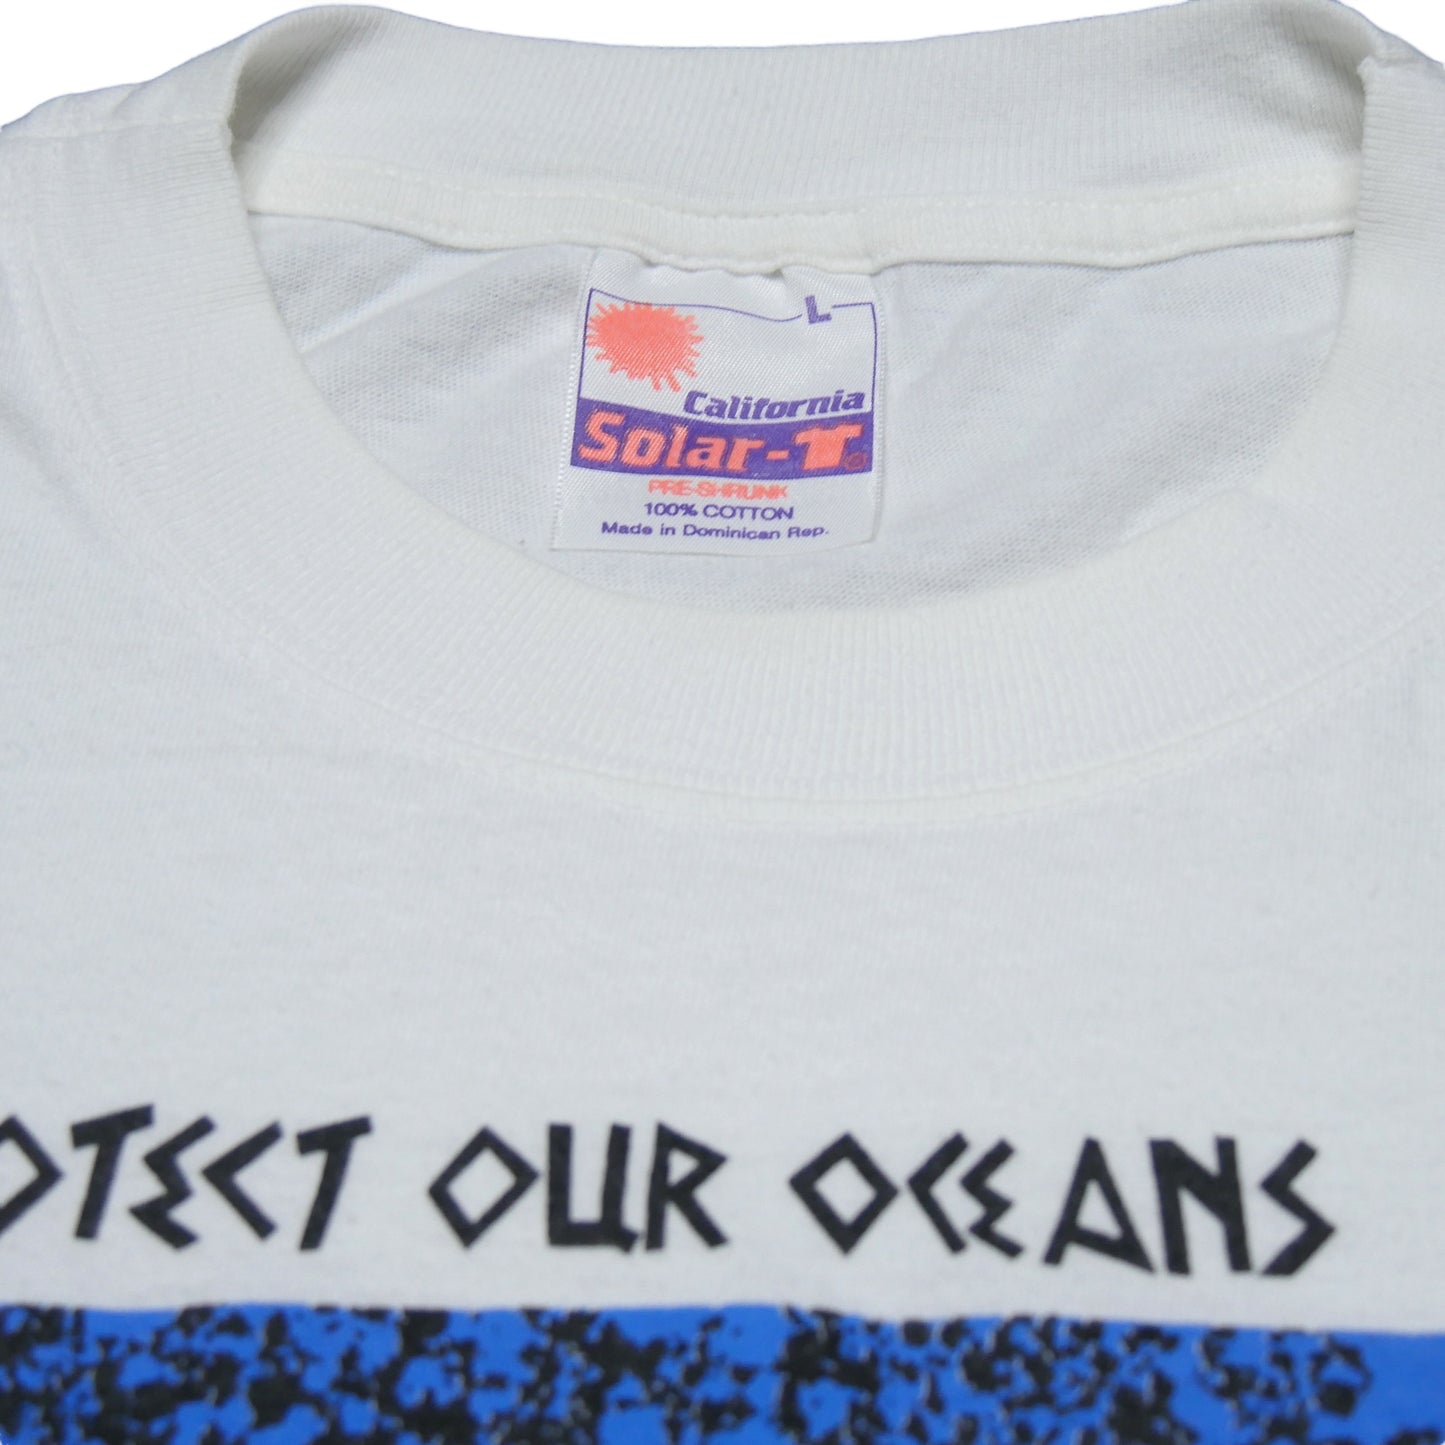 Protect Our Oceans Dolphins Sunglasses Las Vegas Shirt - Large